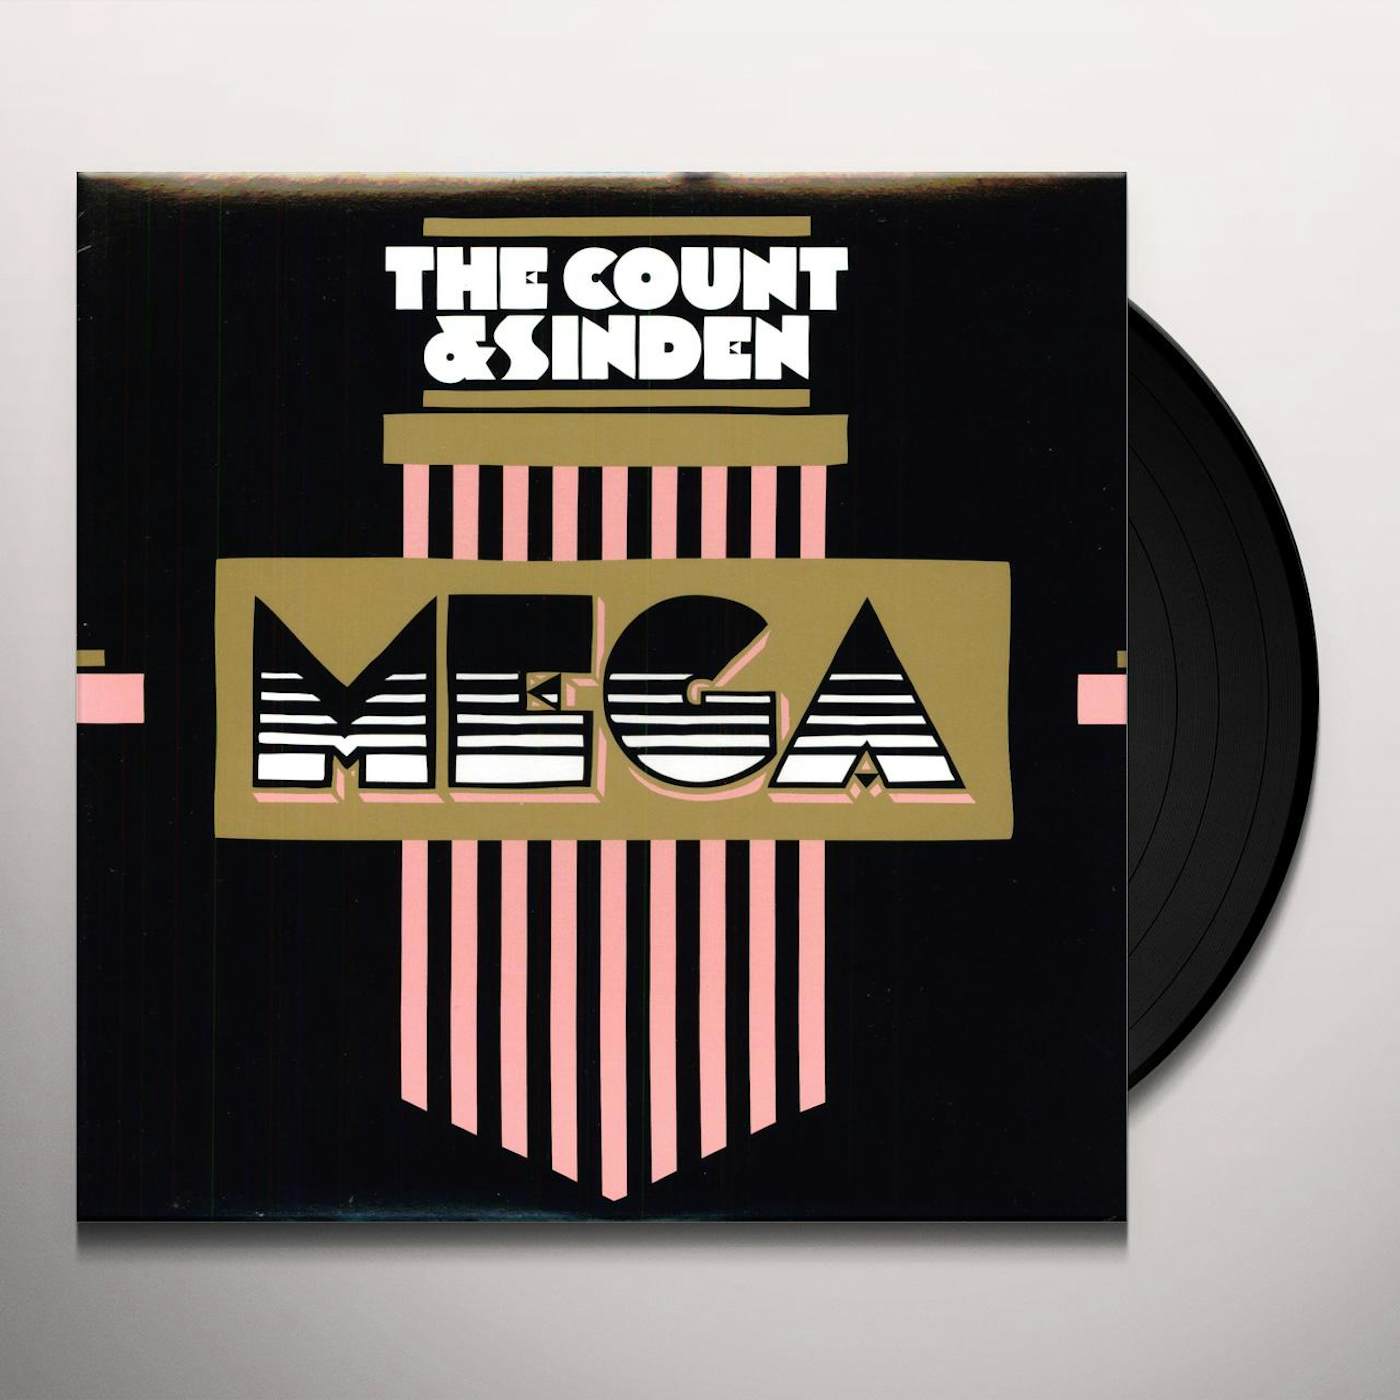 The Count & Sinden MEGA Vinyl Record